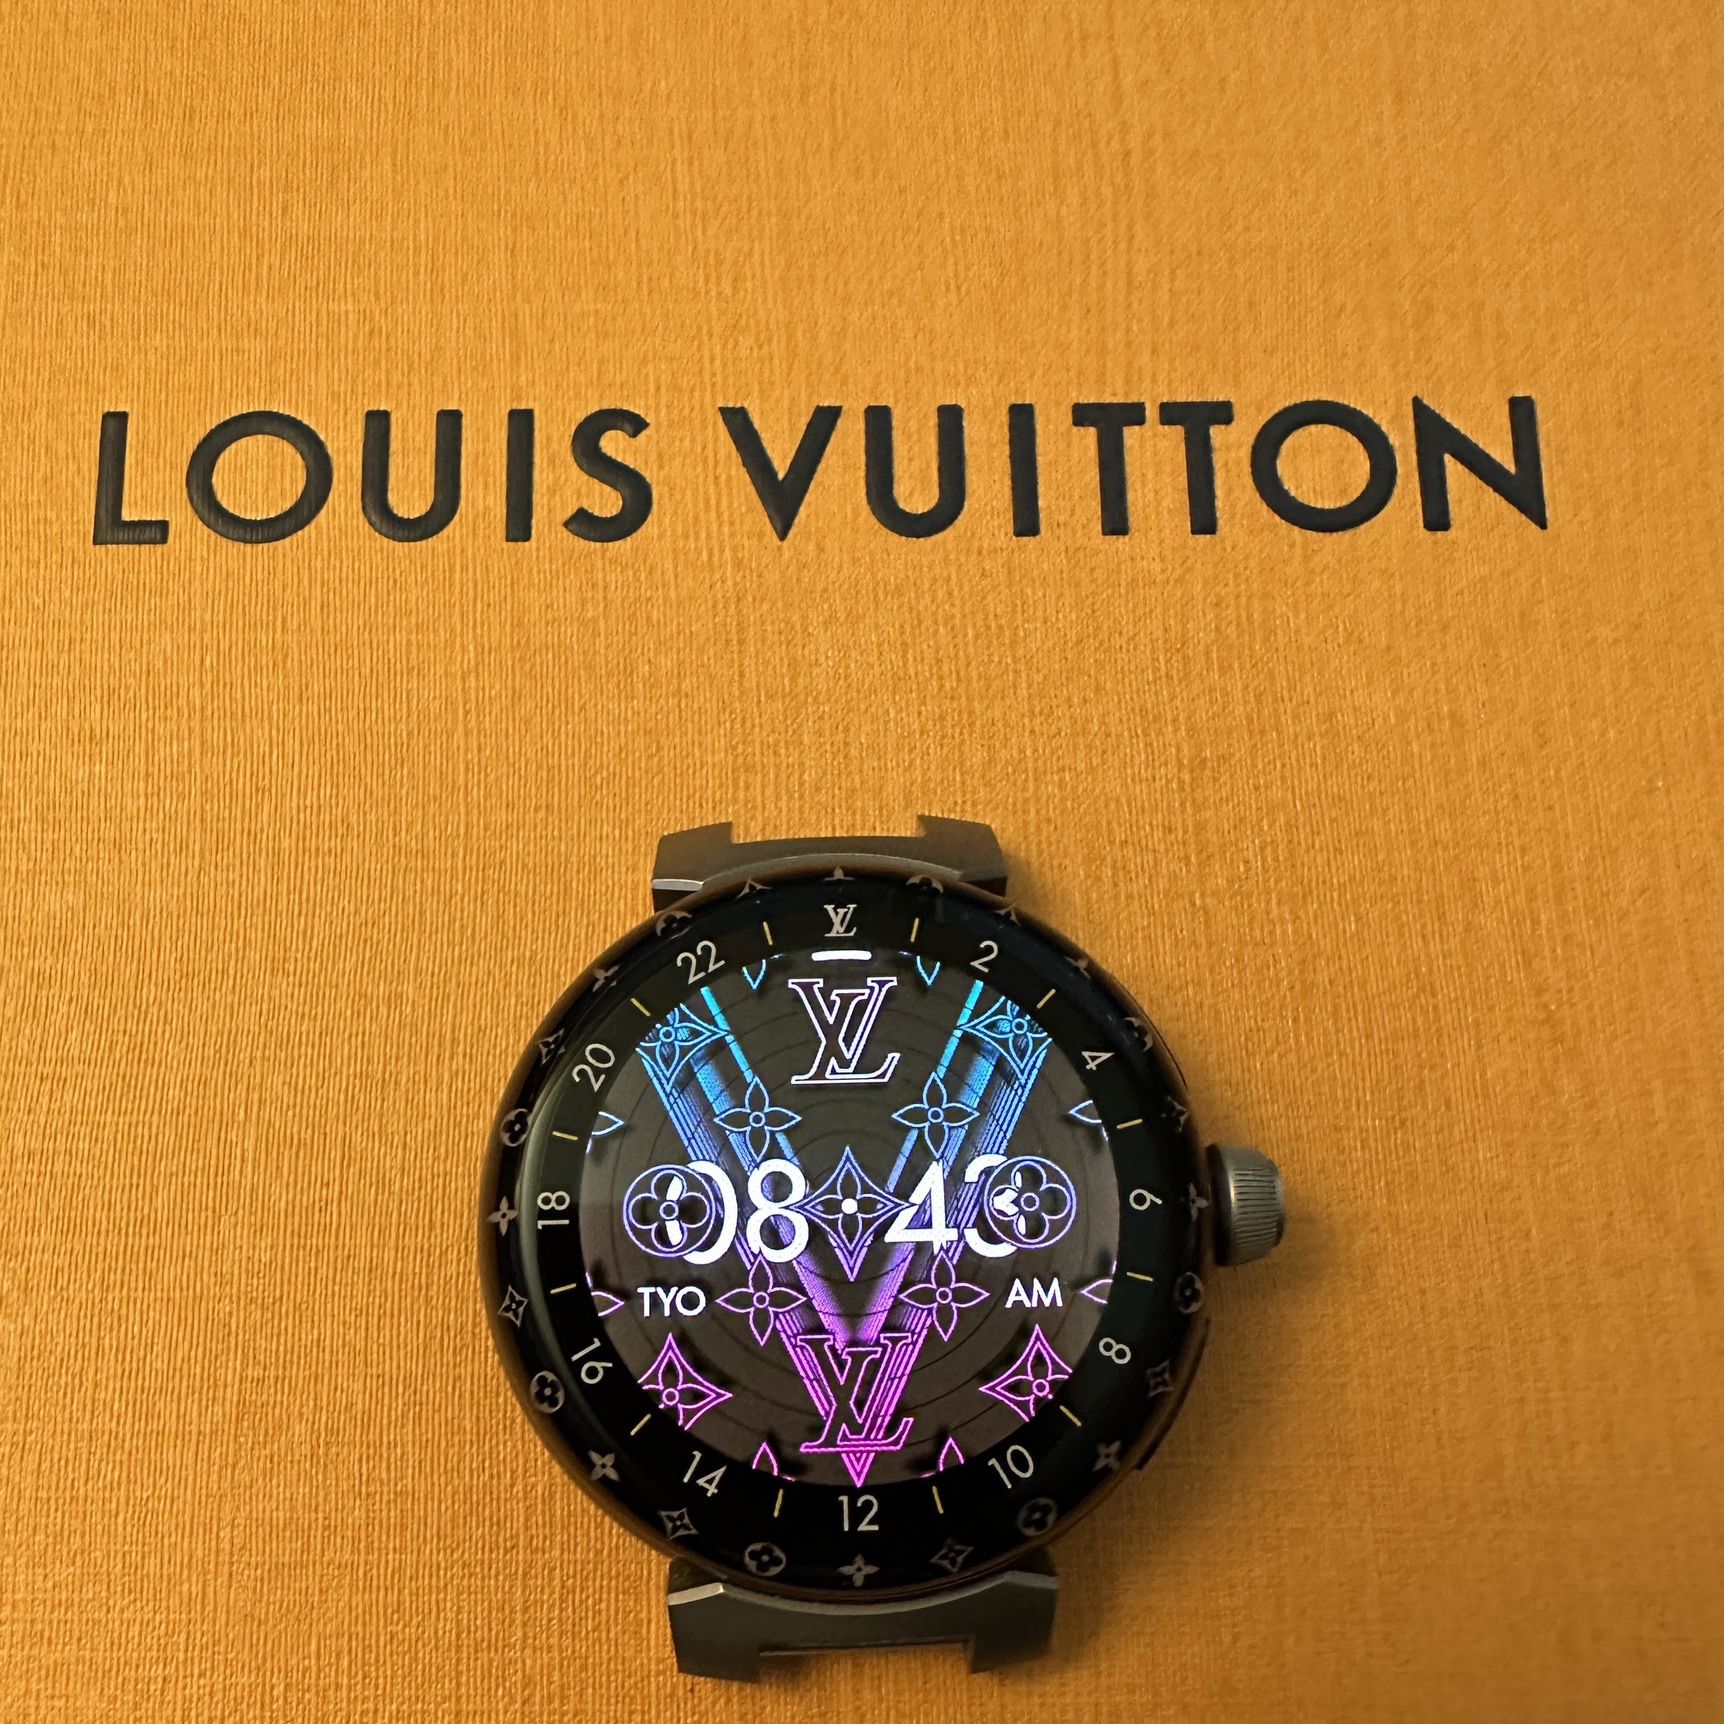 Louis Vuitton Tambour Horizon Light Up – QBB190 – 3,610 USD – The